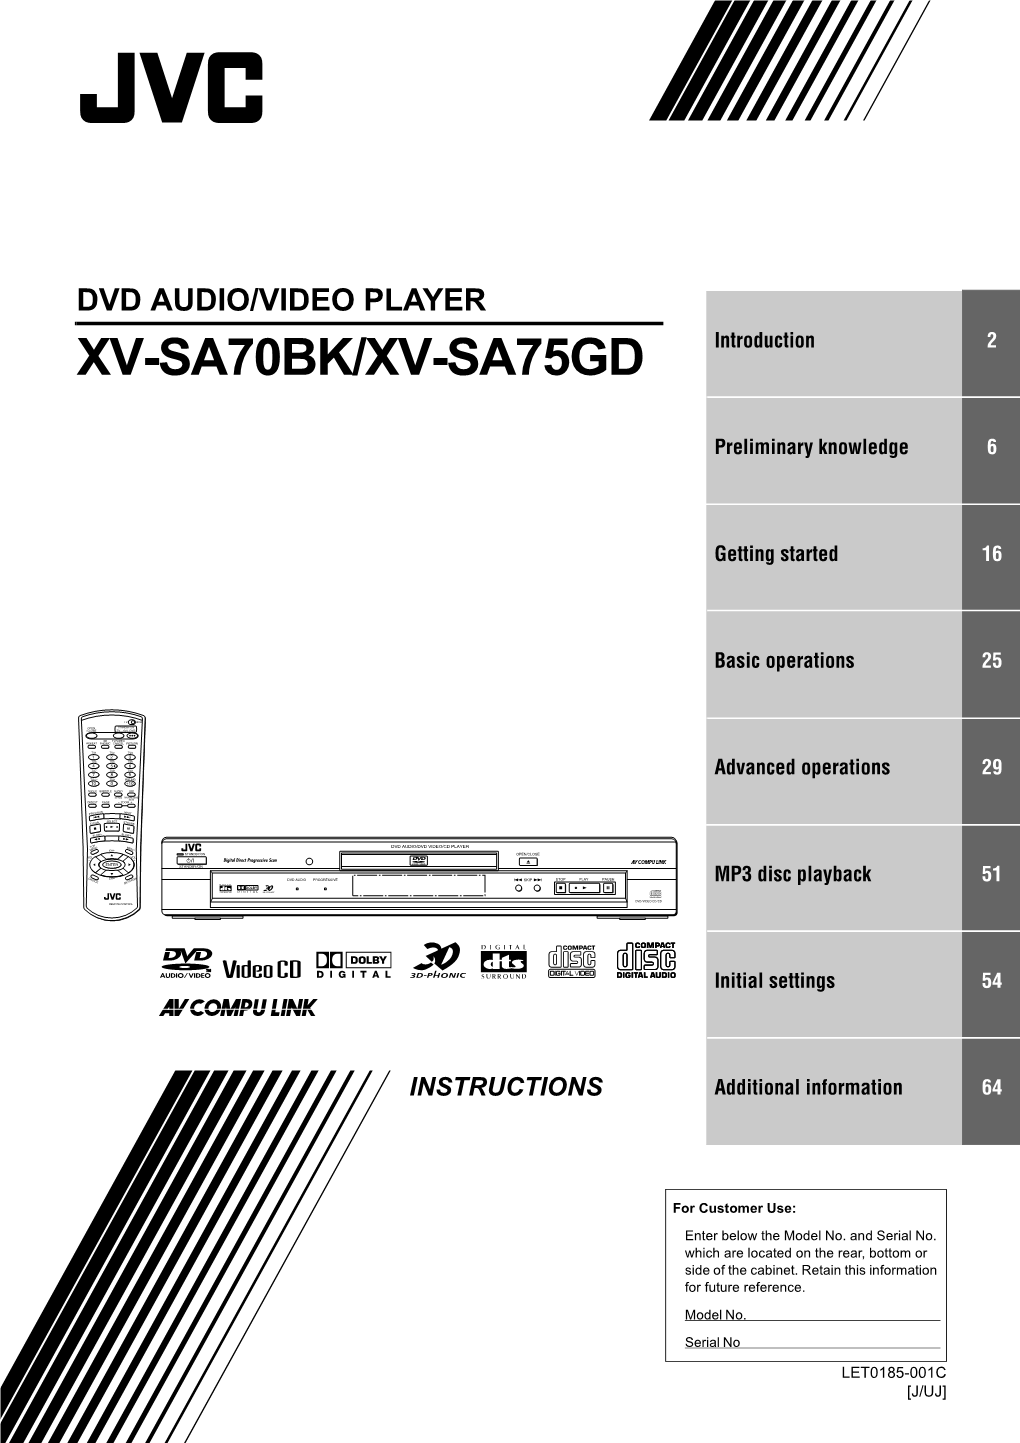 Dvd Audio/Video Player